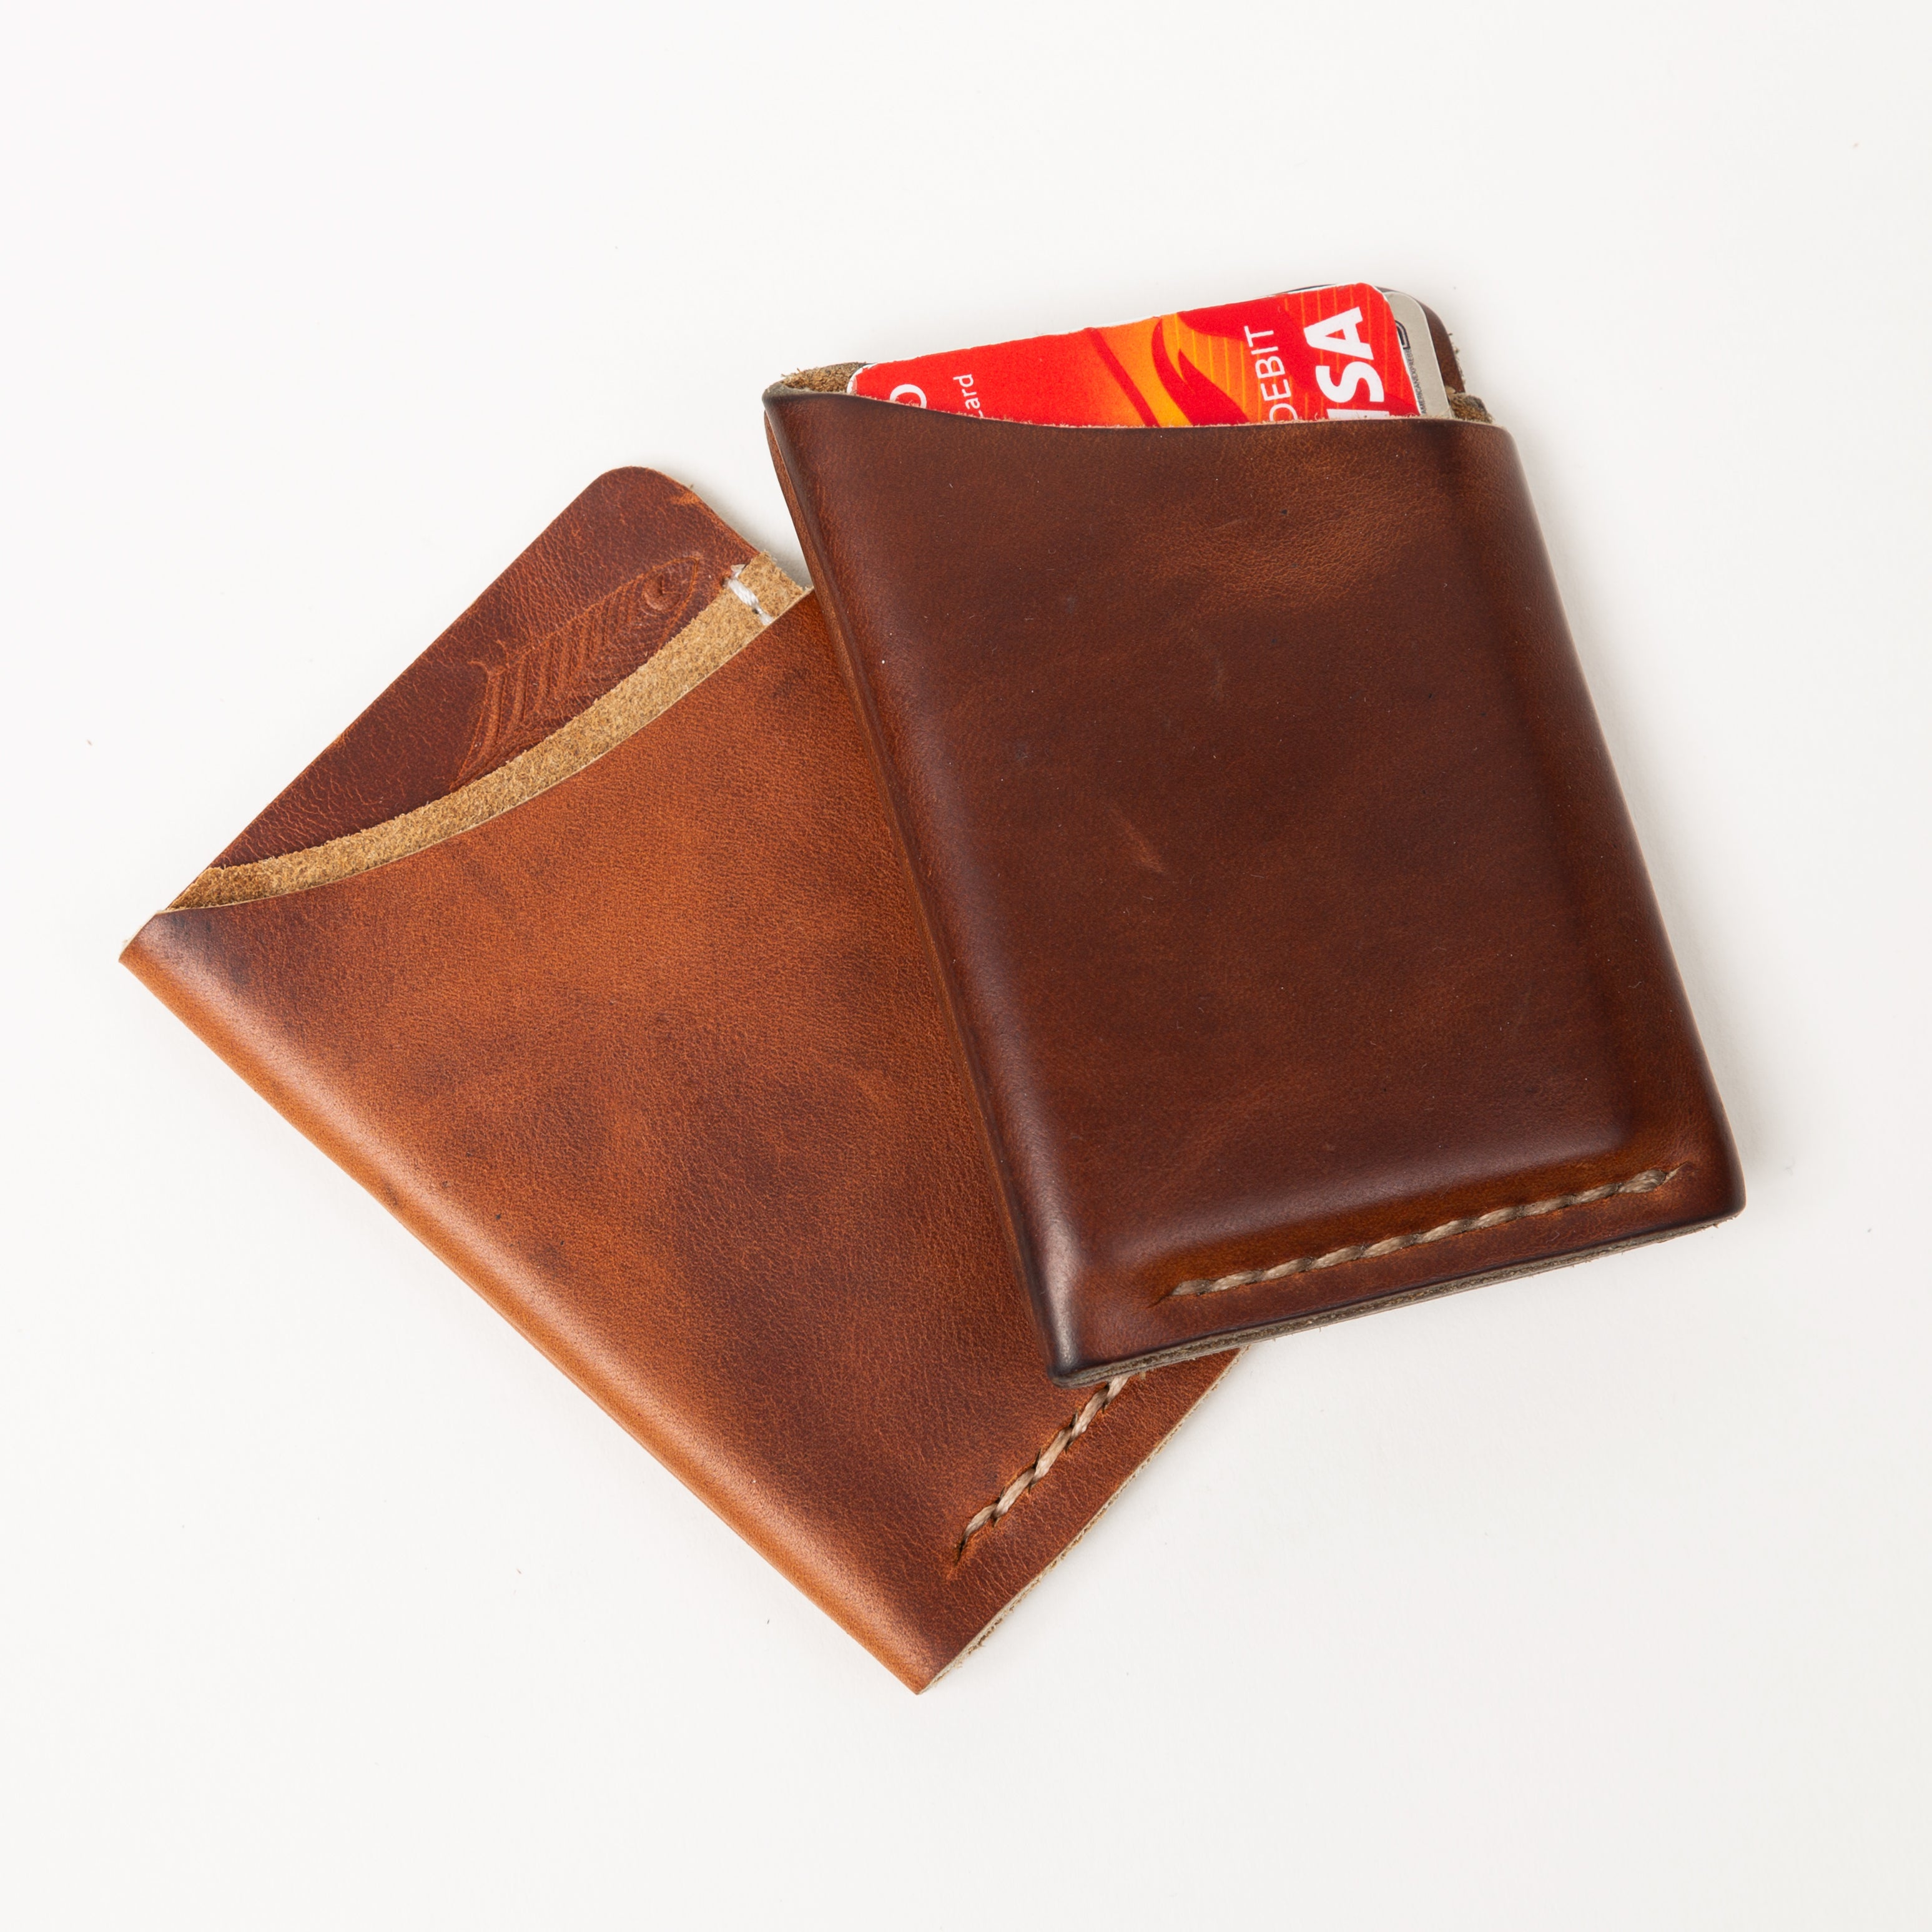 The Slim Card Wallet